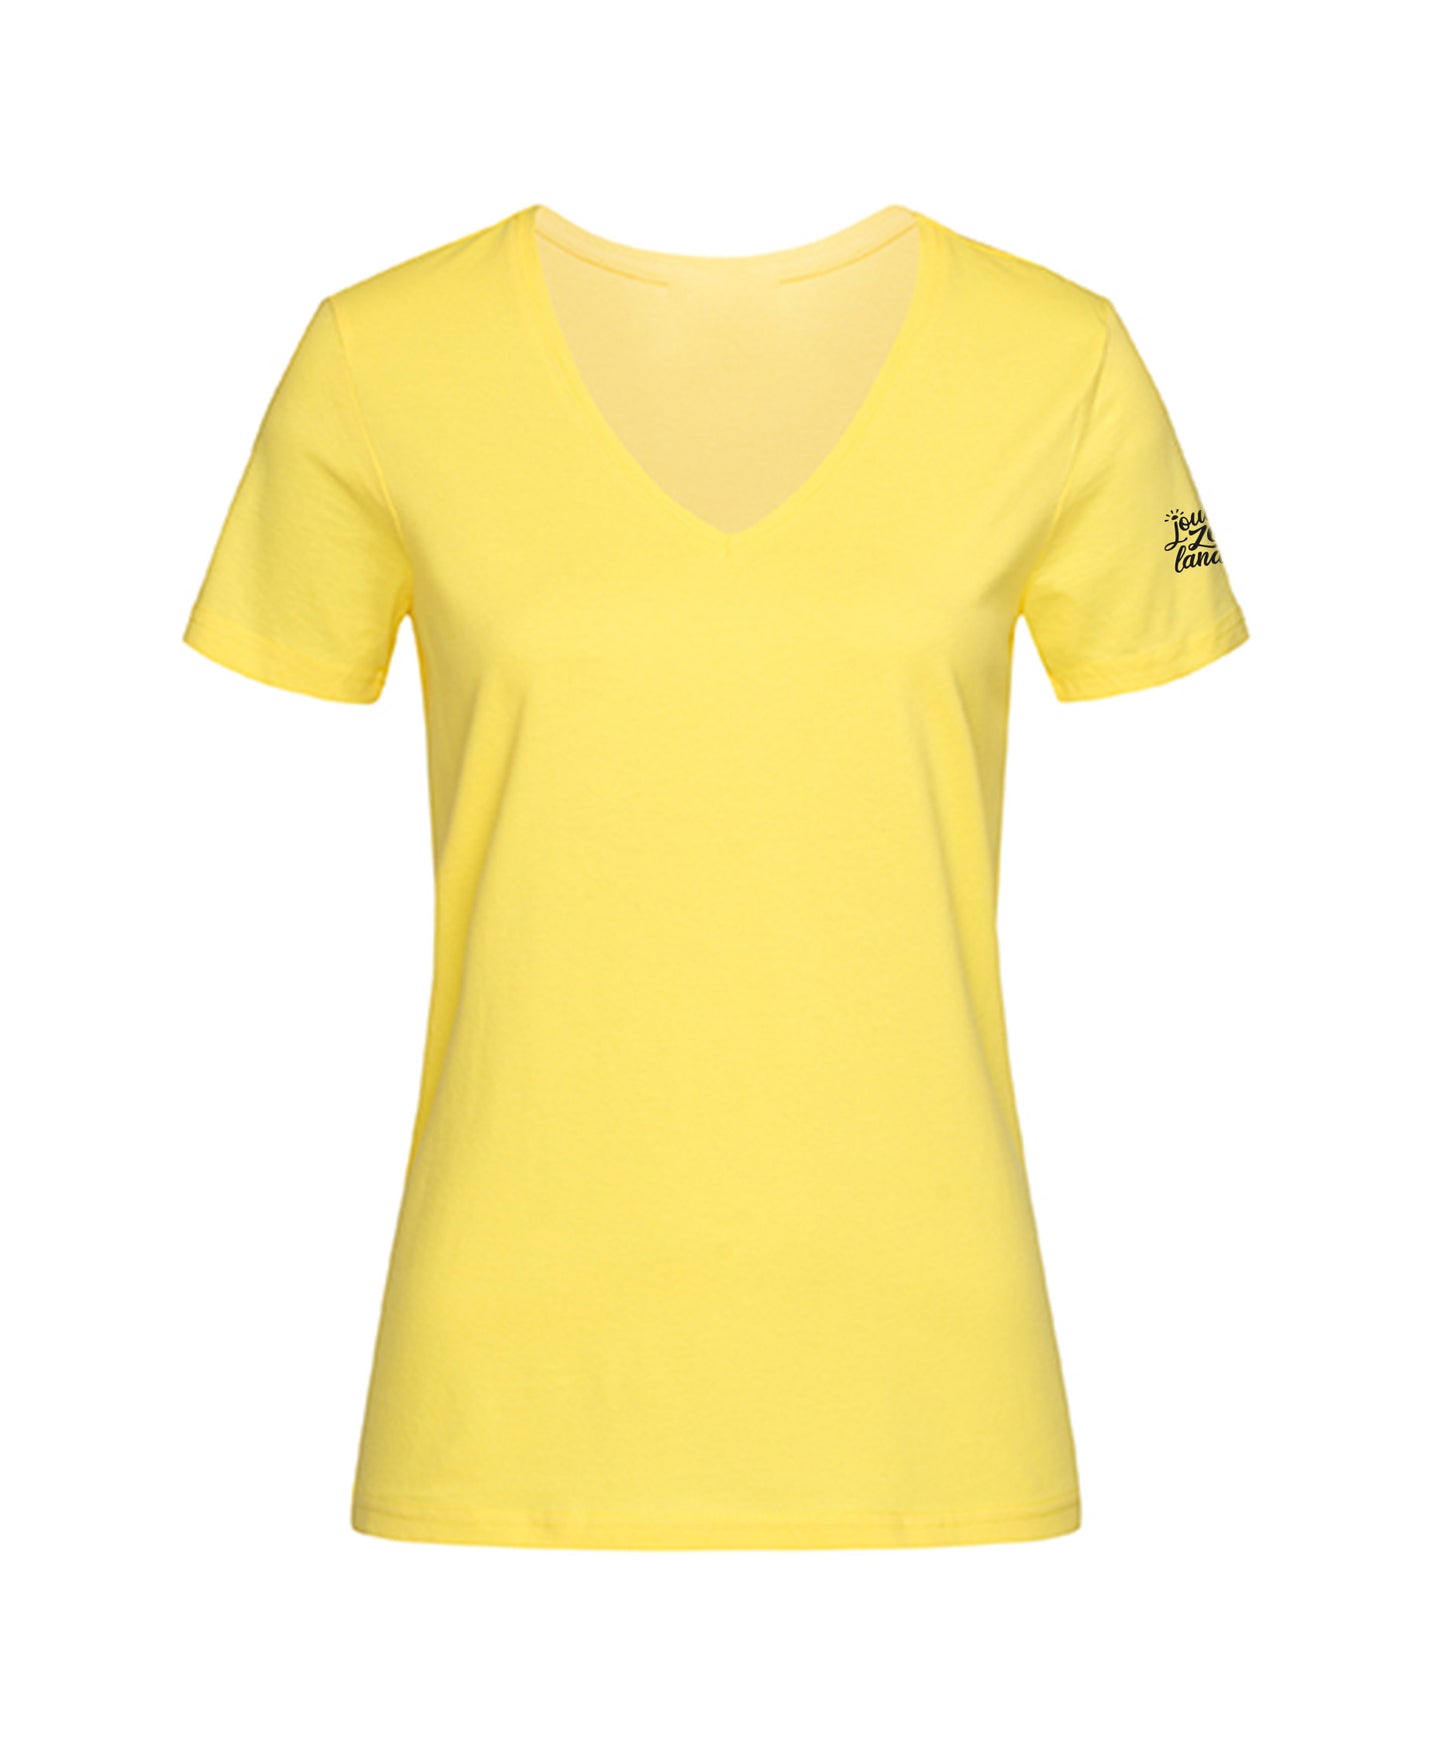 T-Shirt woman V-Neck | Renesse